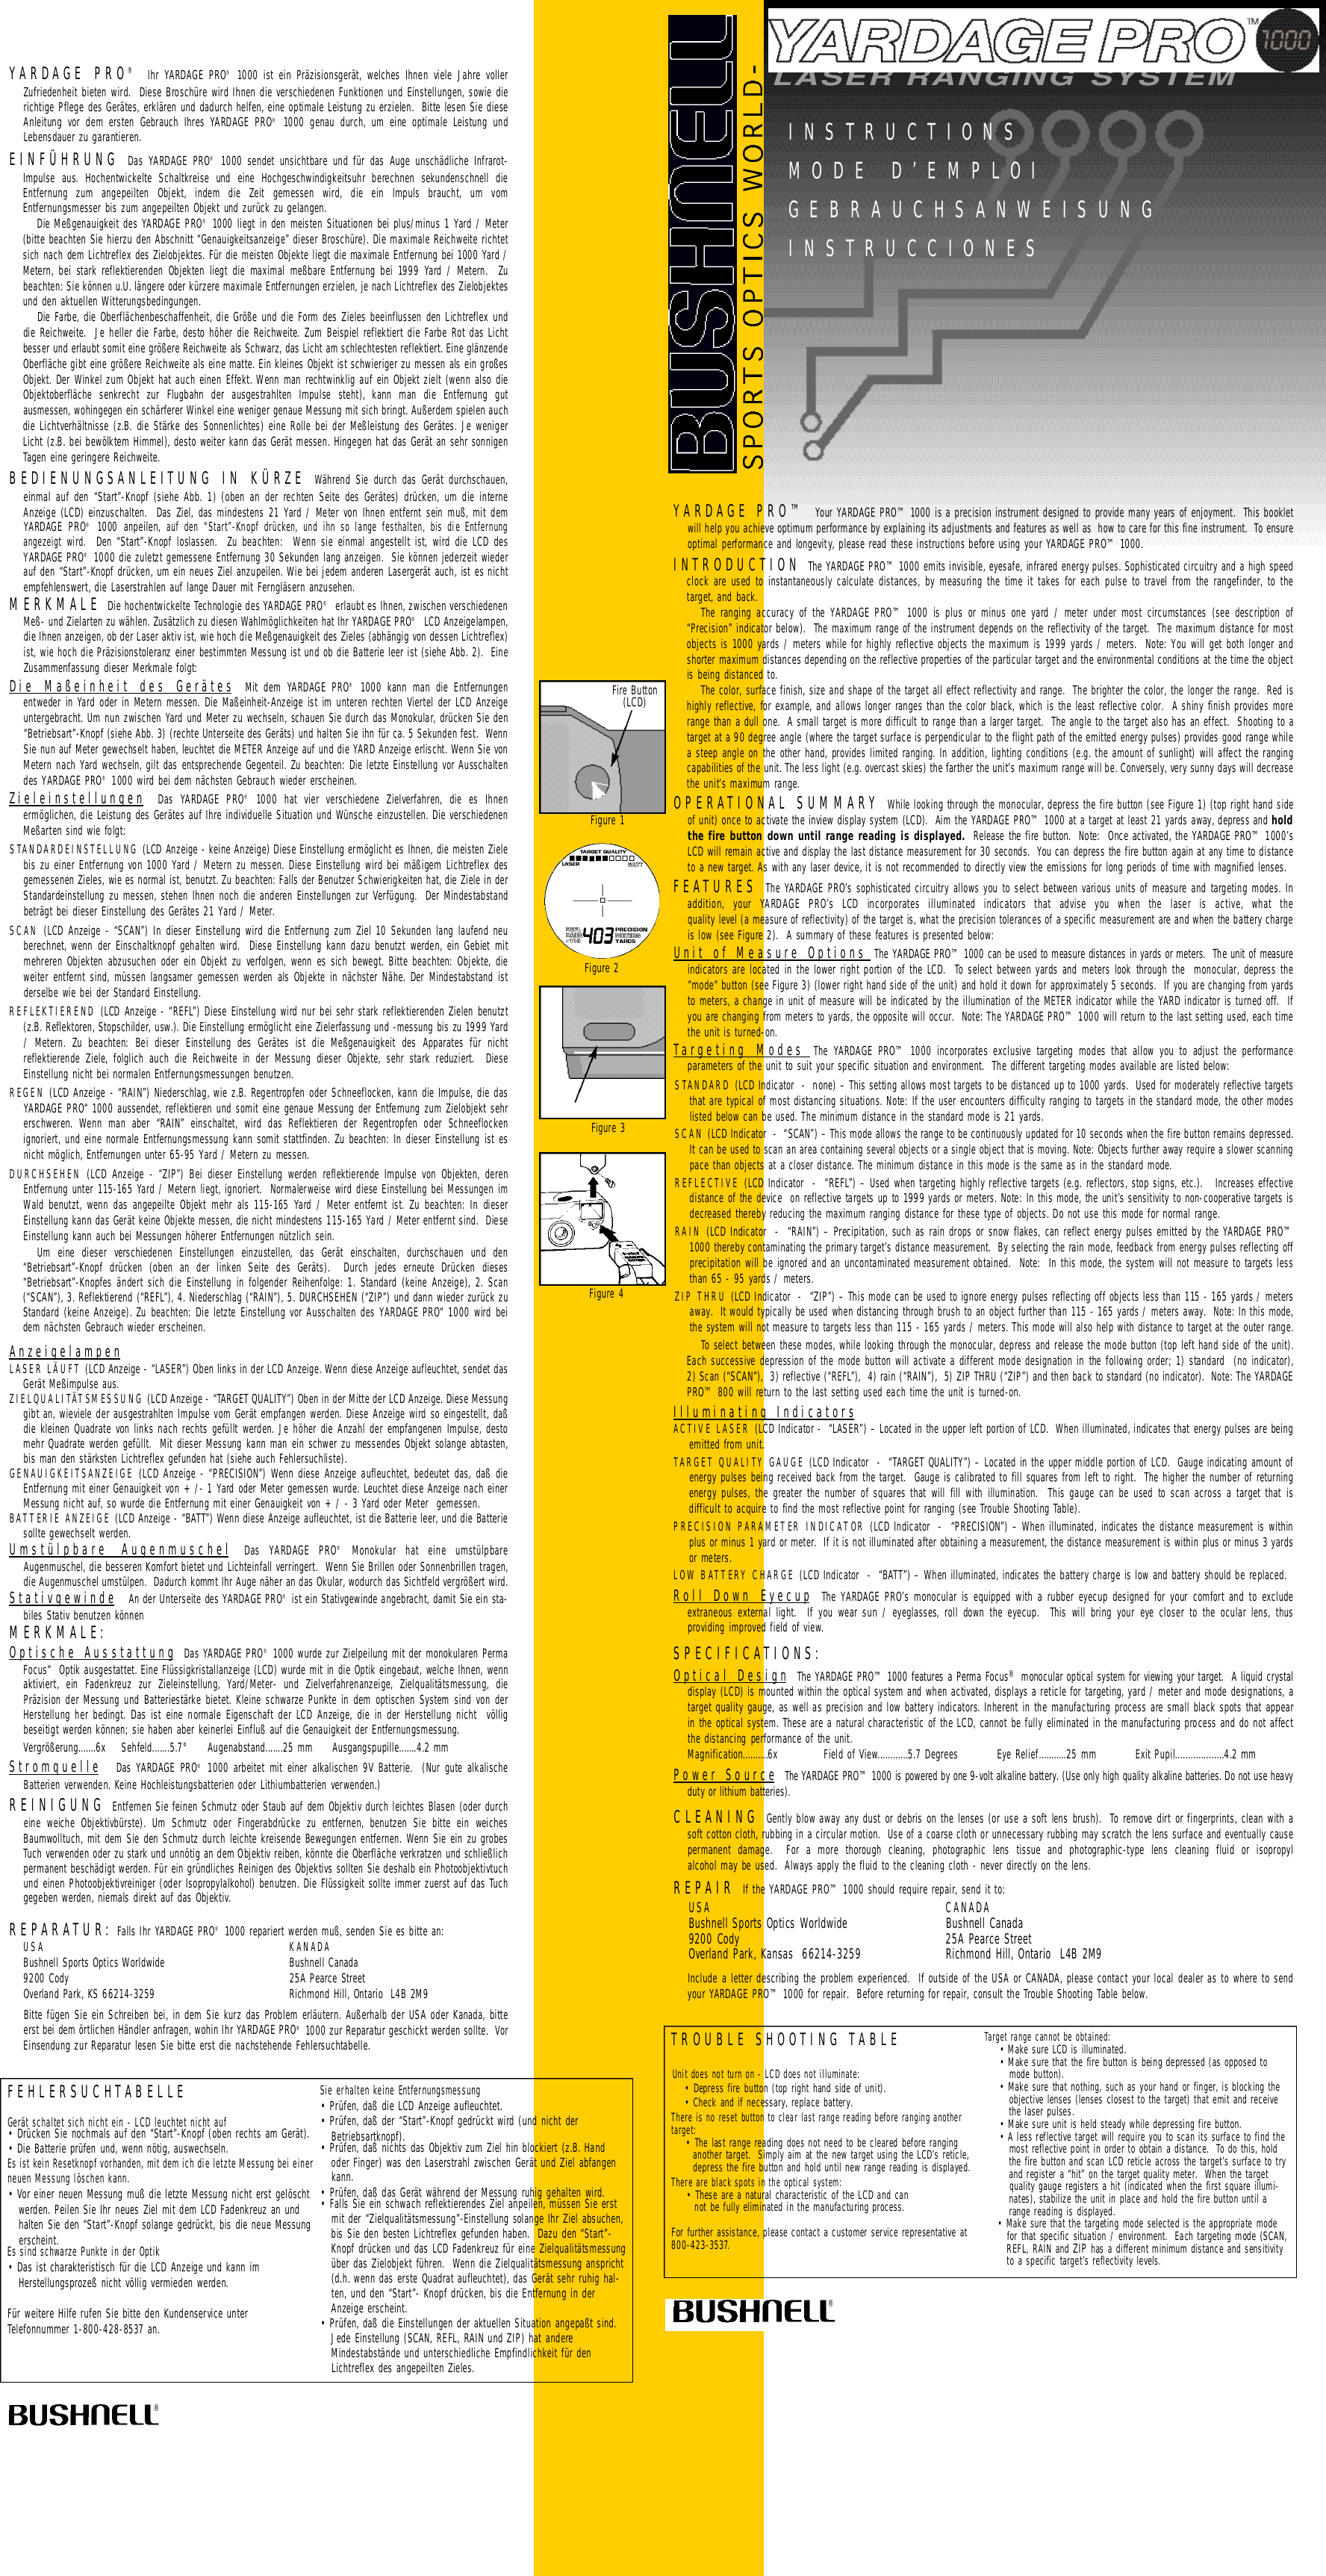 Page 1 of 2 - Bushnell Bushnell-Yardage-Pro-1000-201000-Owner-S-Manual